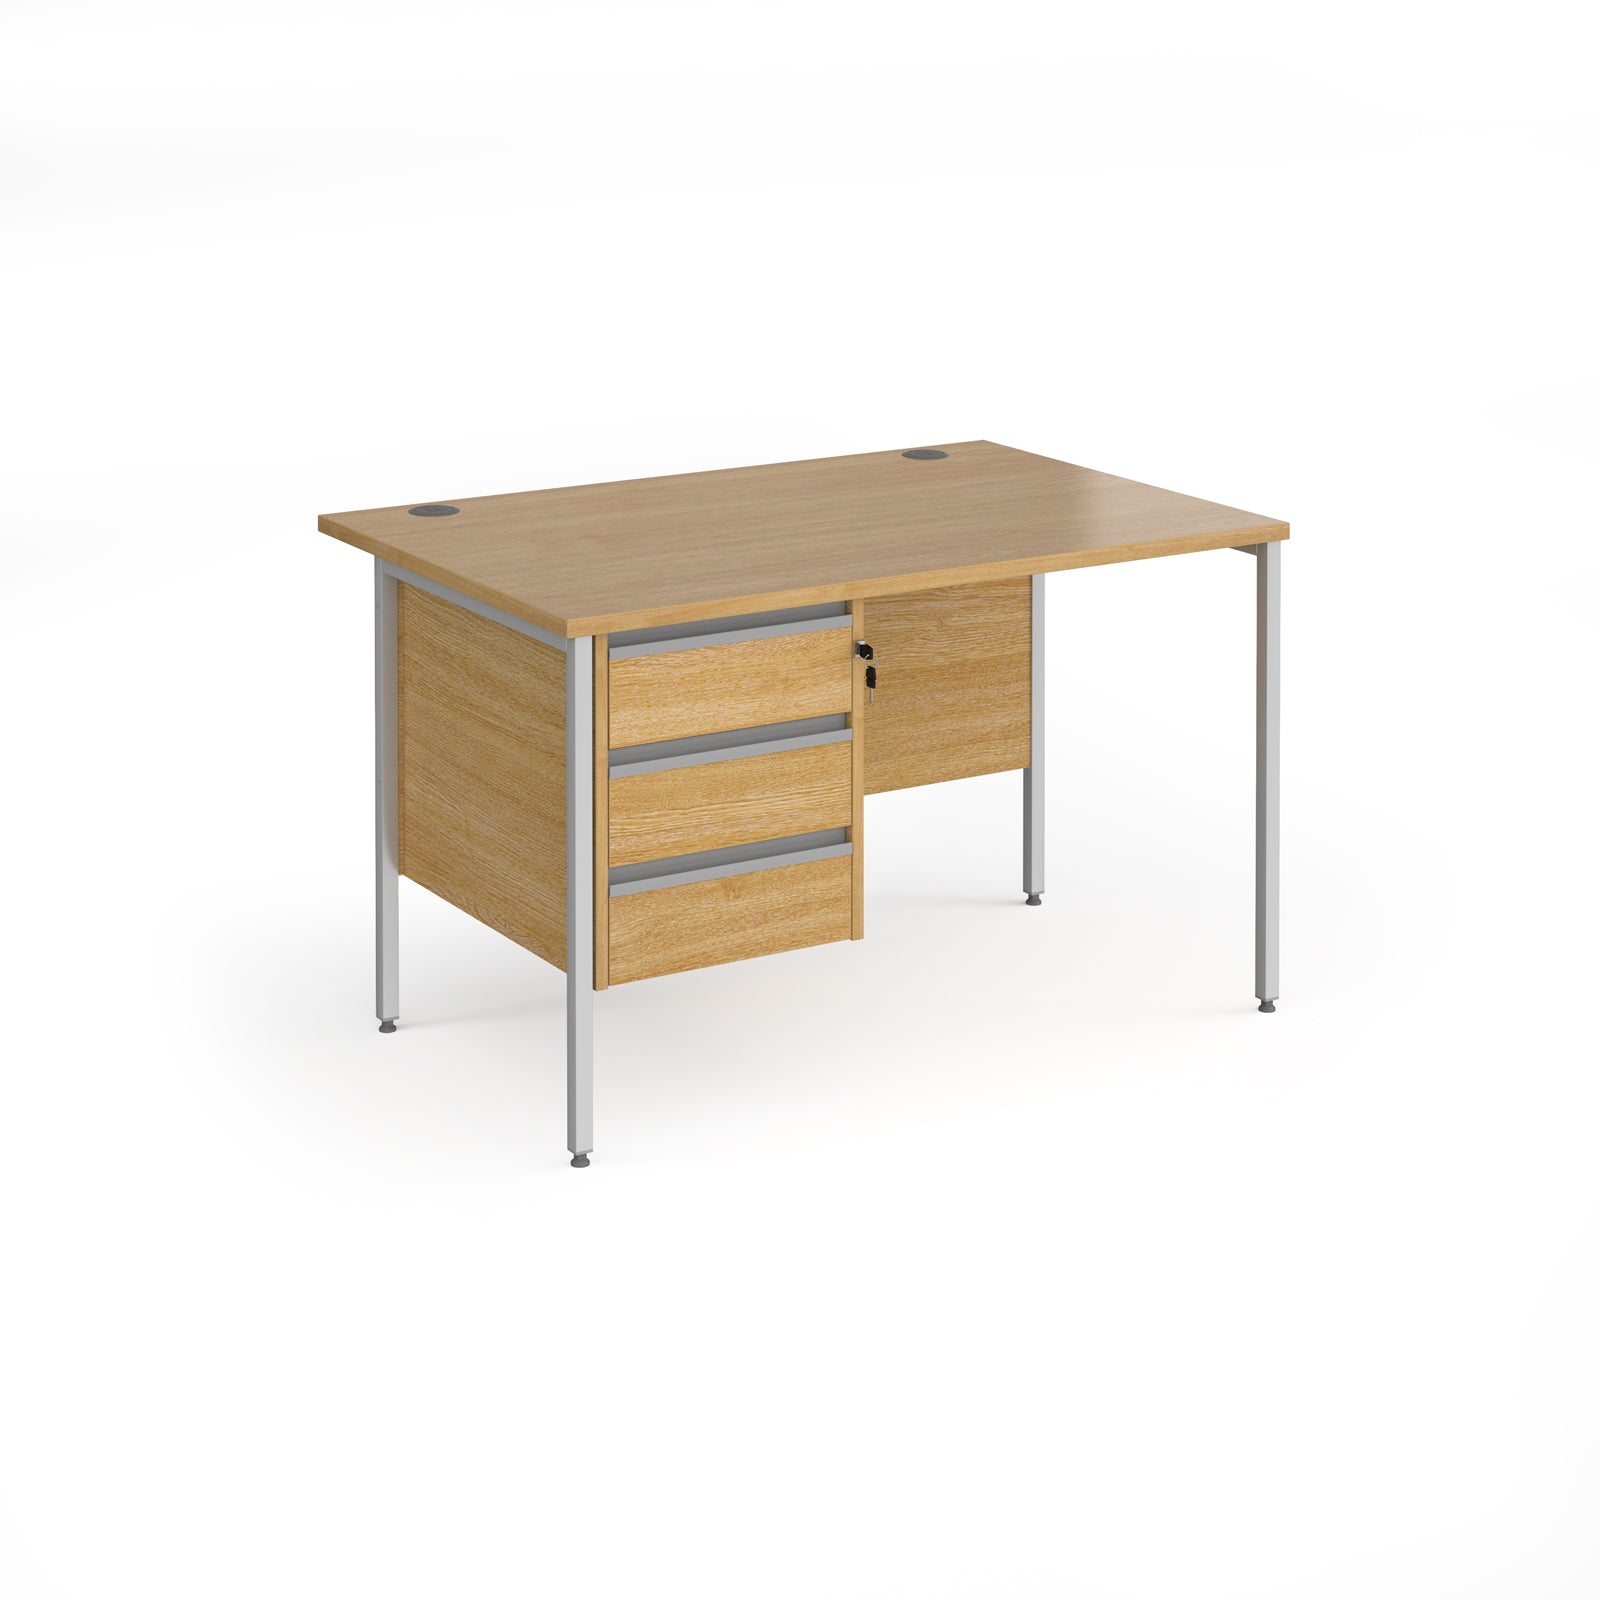 Chicago Desk with H-Frame Legs - 3 Drawer Pedestal